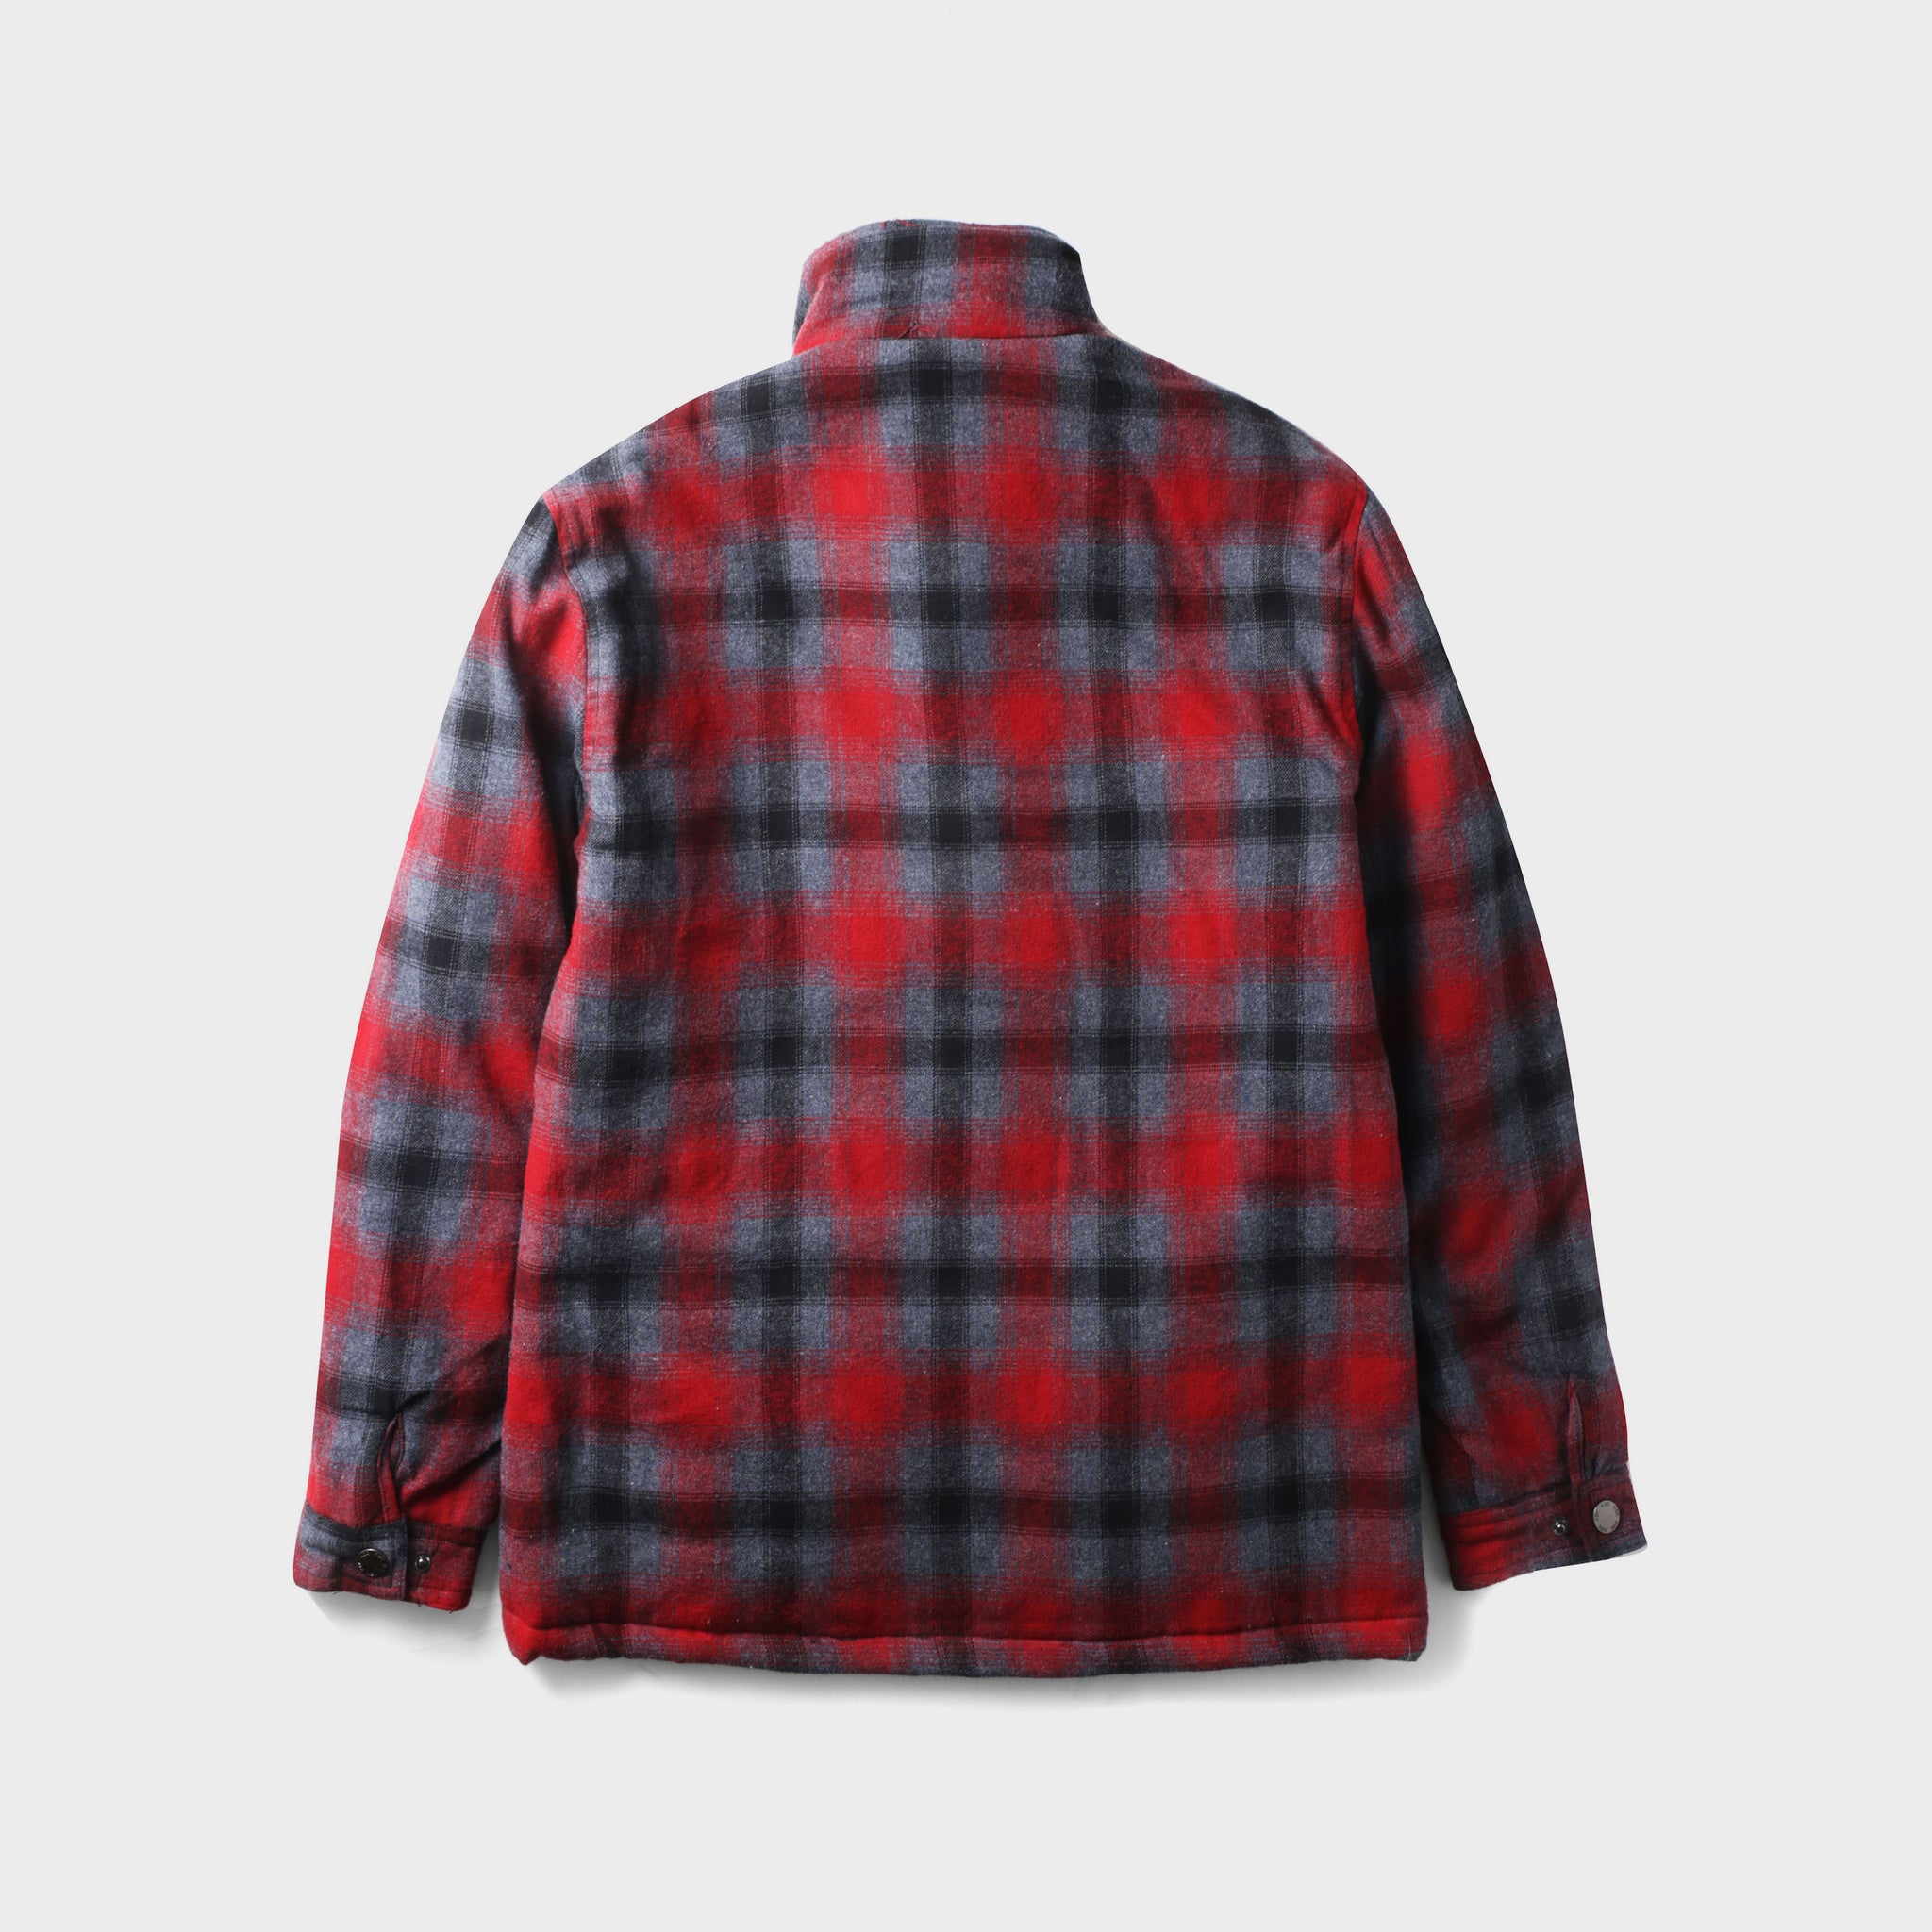 flannel jacket_flannel shirt jacket_sherpa lined flannel_flannel jacket with hood_mens flannel jacket_quilted flannel jacket_flannel lined jacket_Red